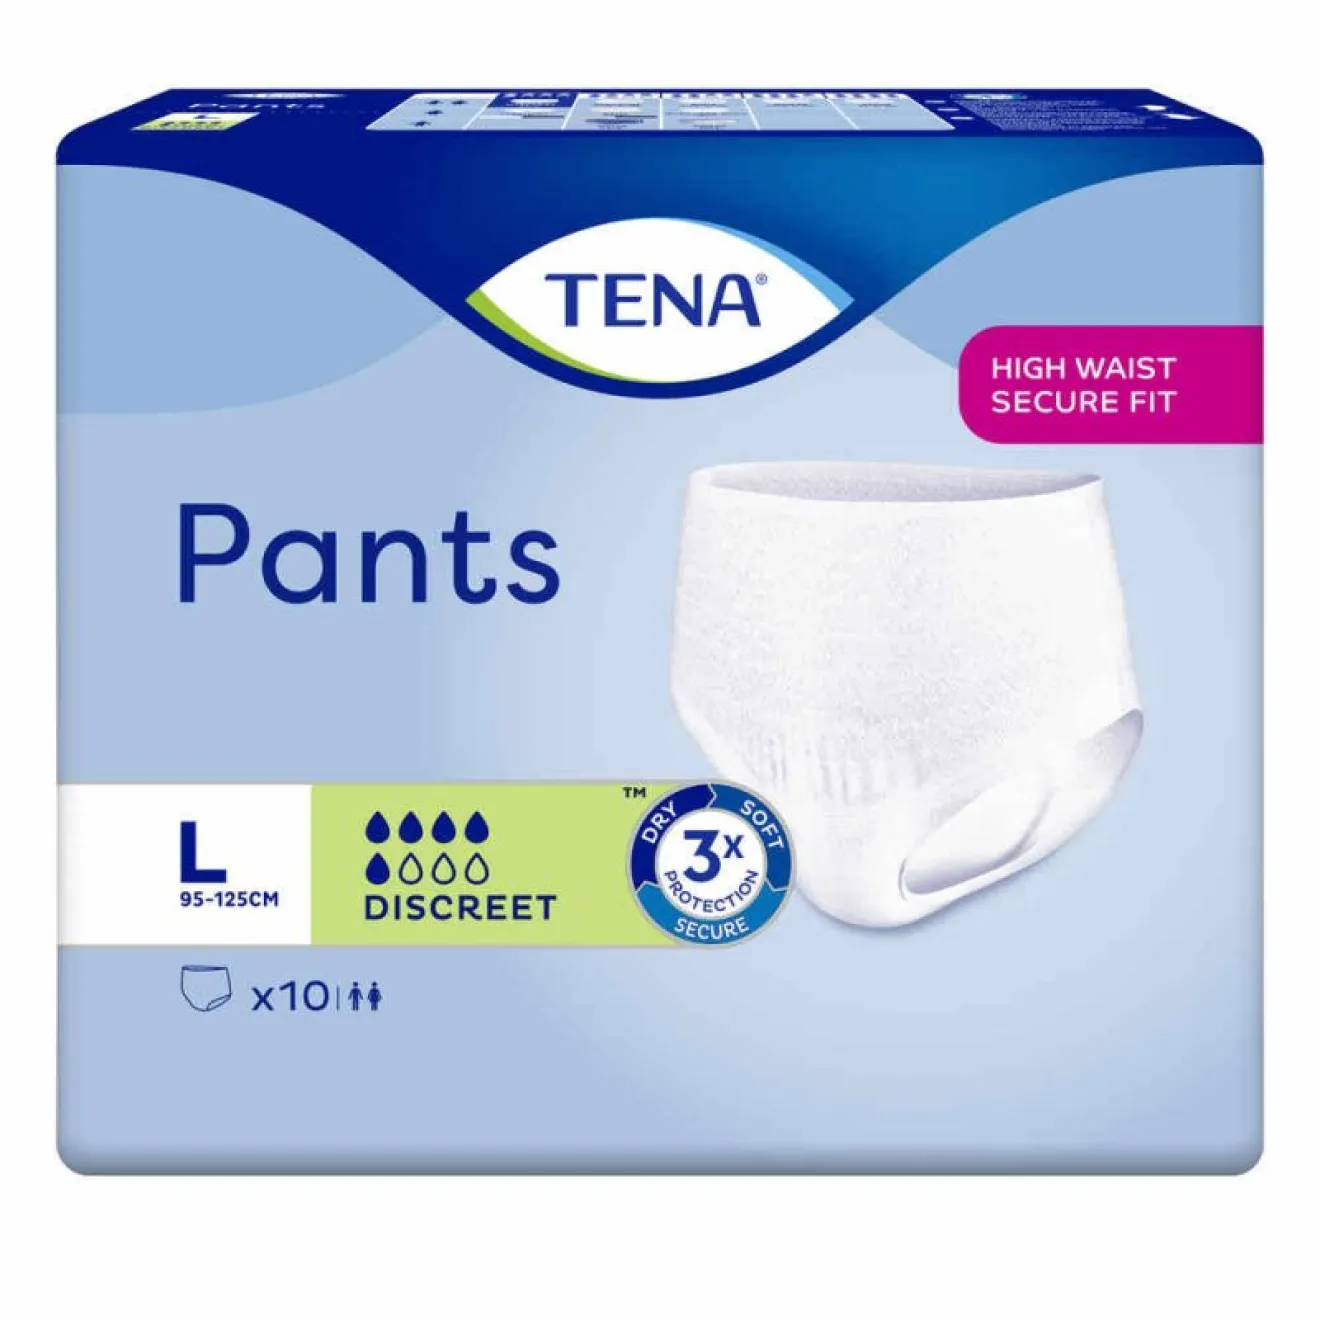 TENA Pants Discreet large 4x10 ST